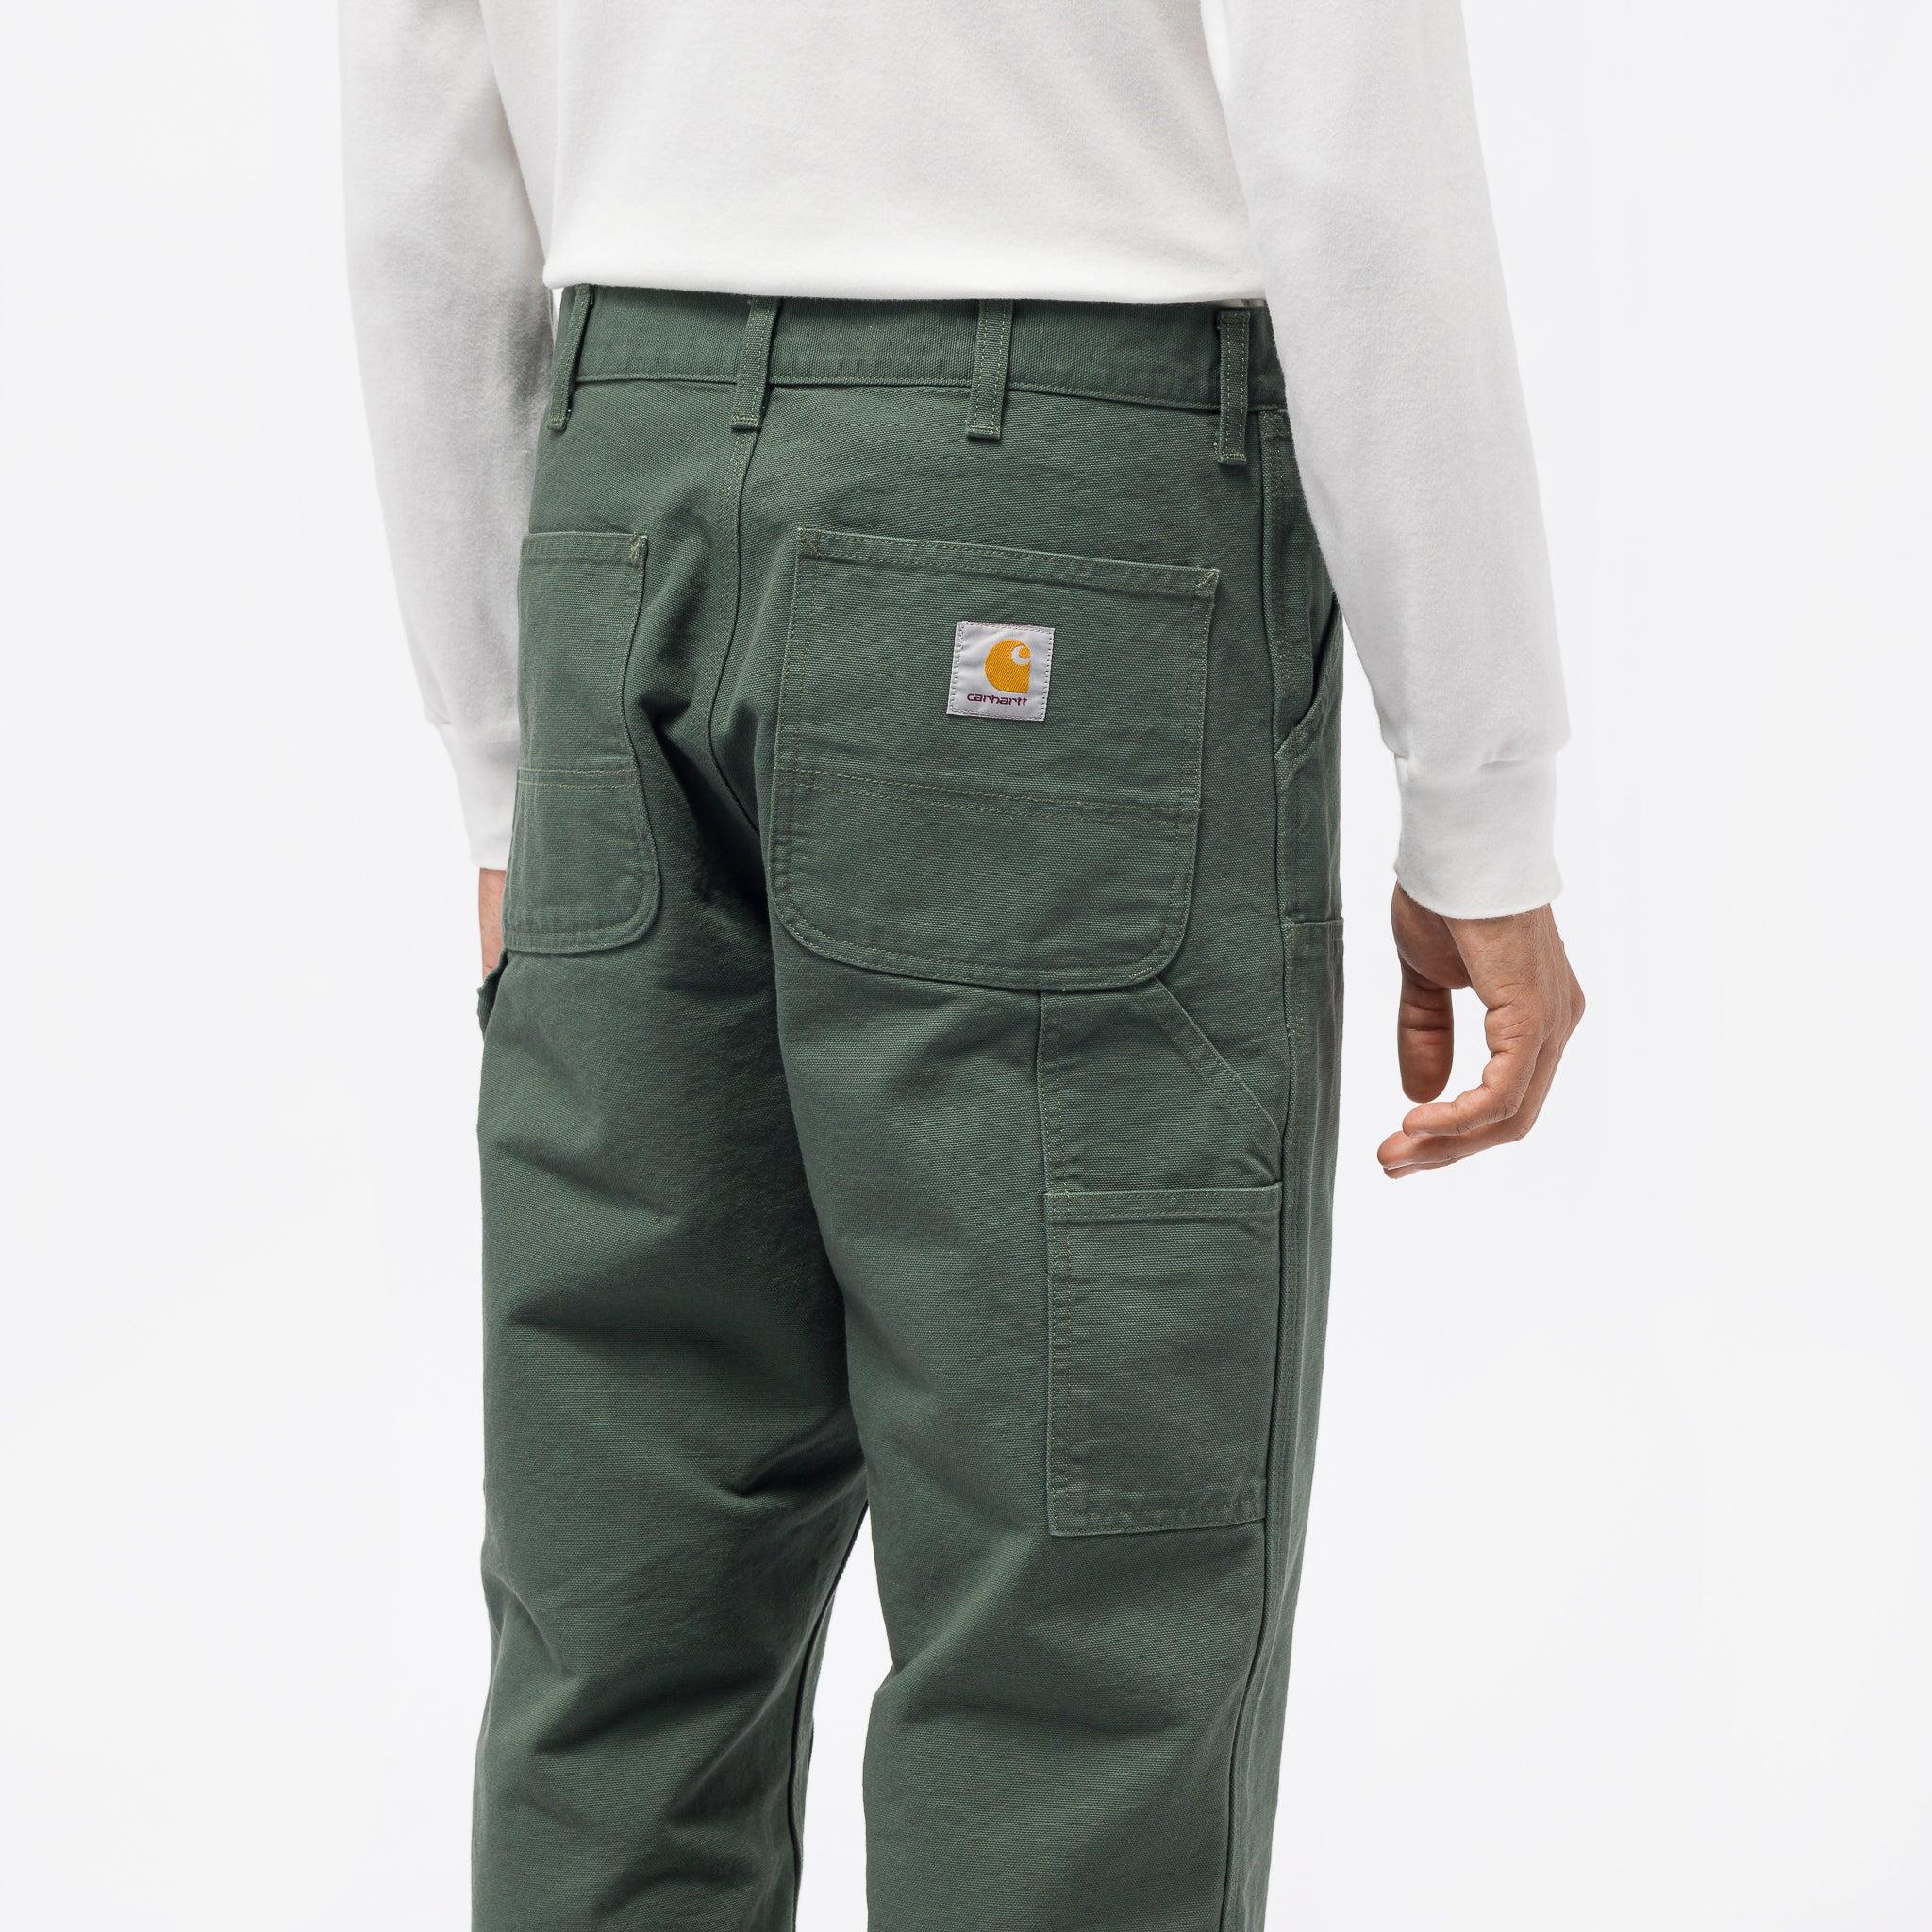 Green Carhartt Pants